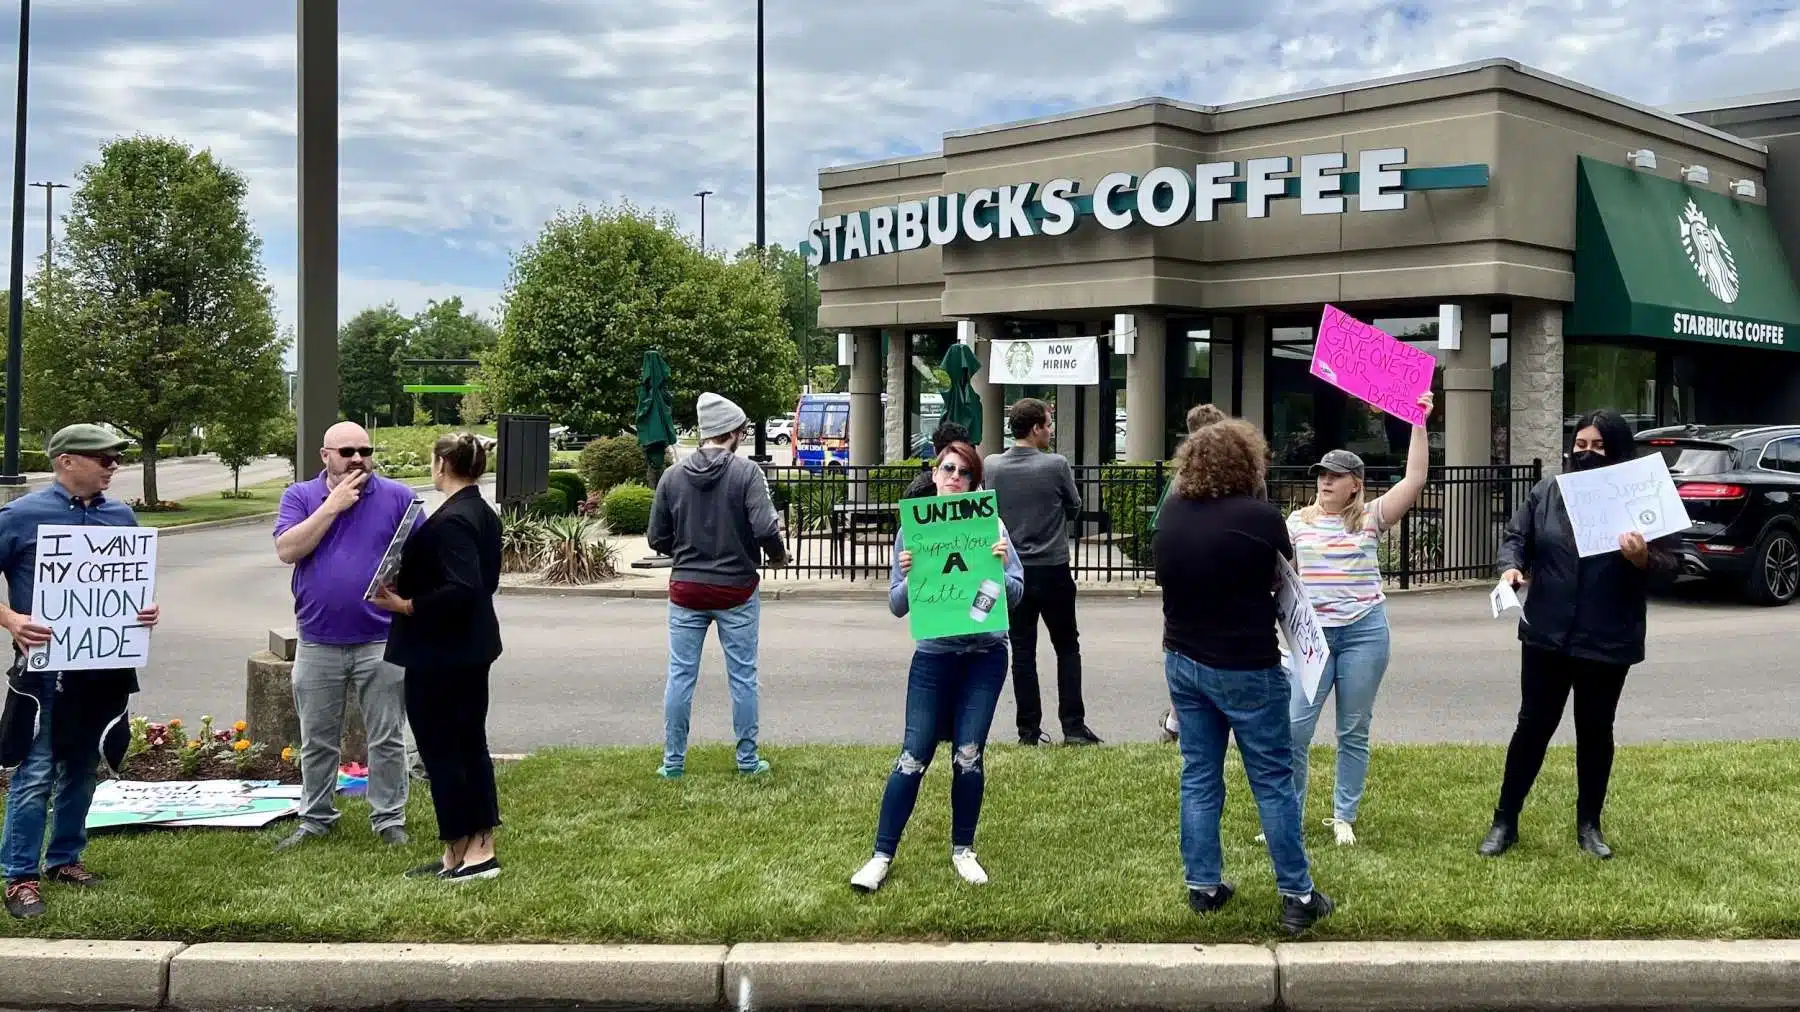 Rhode Island News: RI’s labor movement welcomes unionizing Starbucks workers